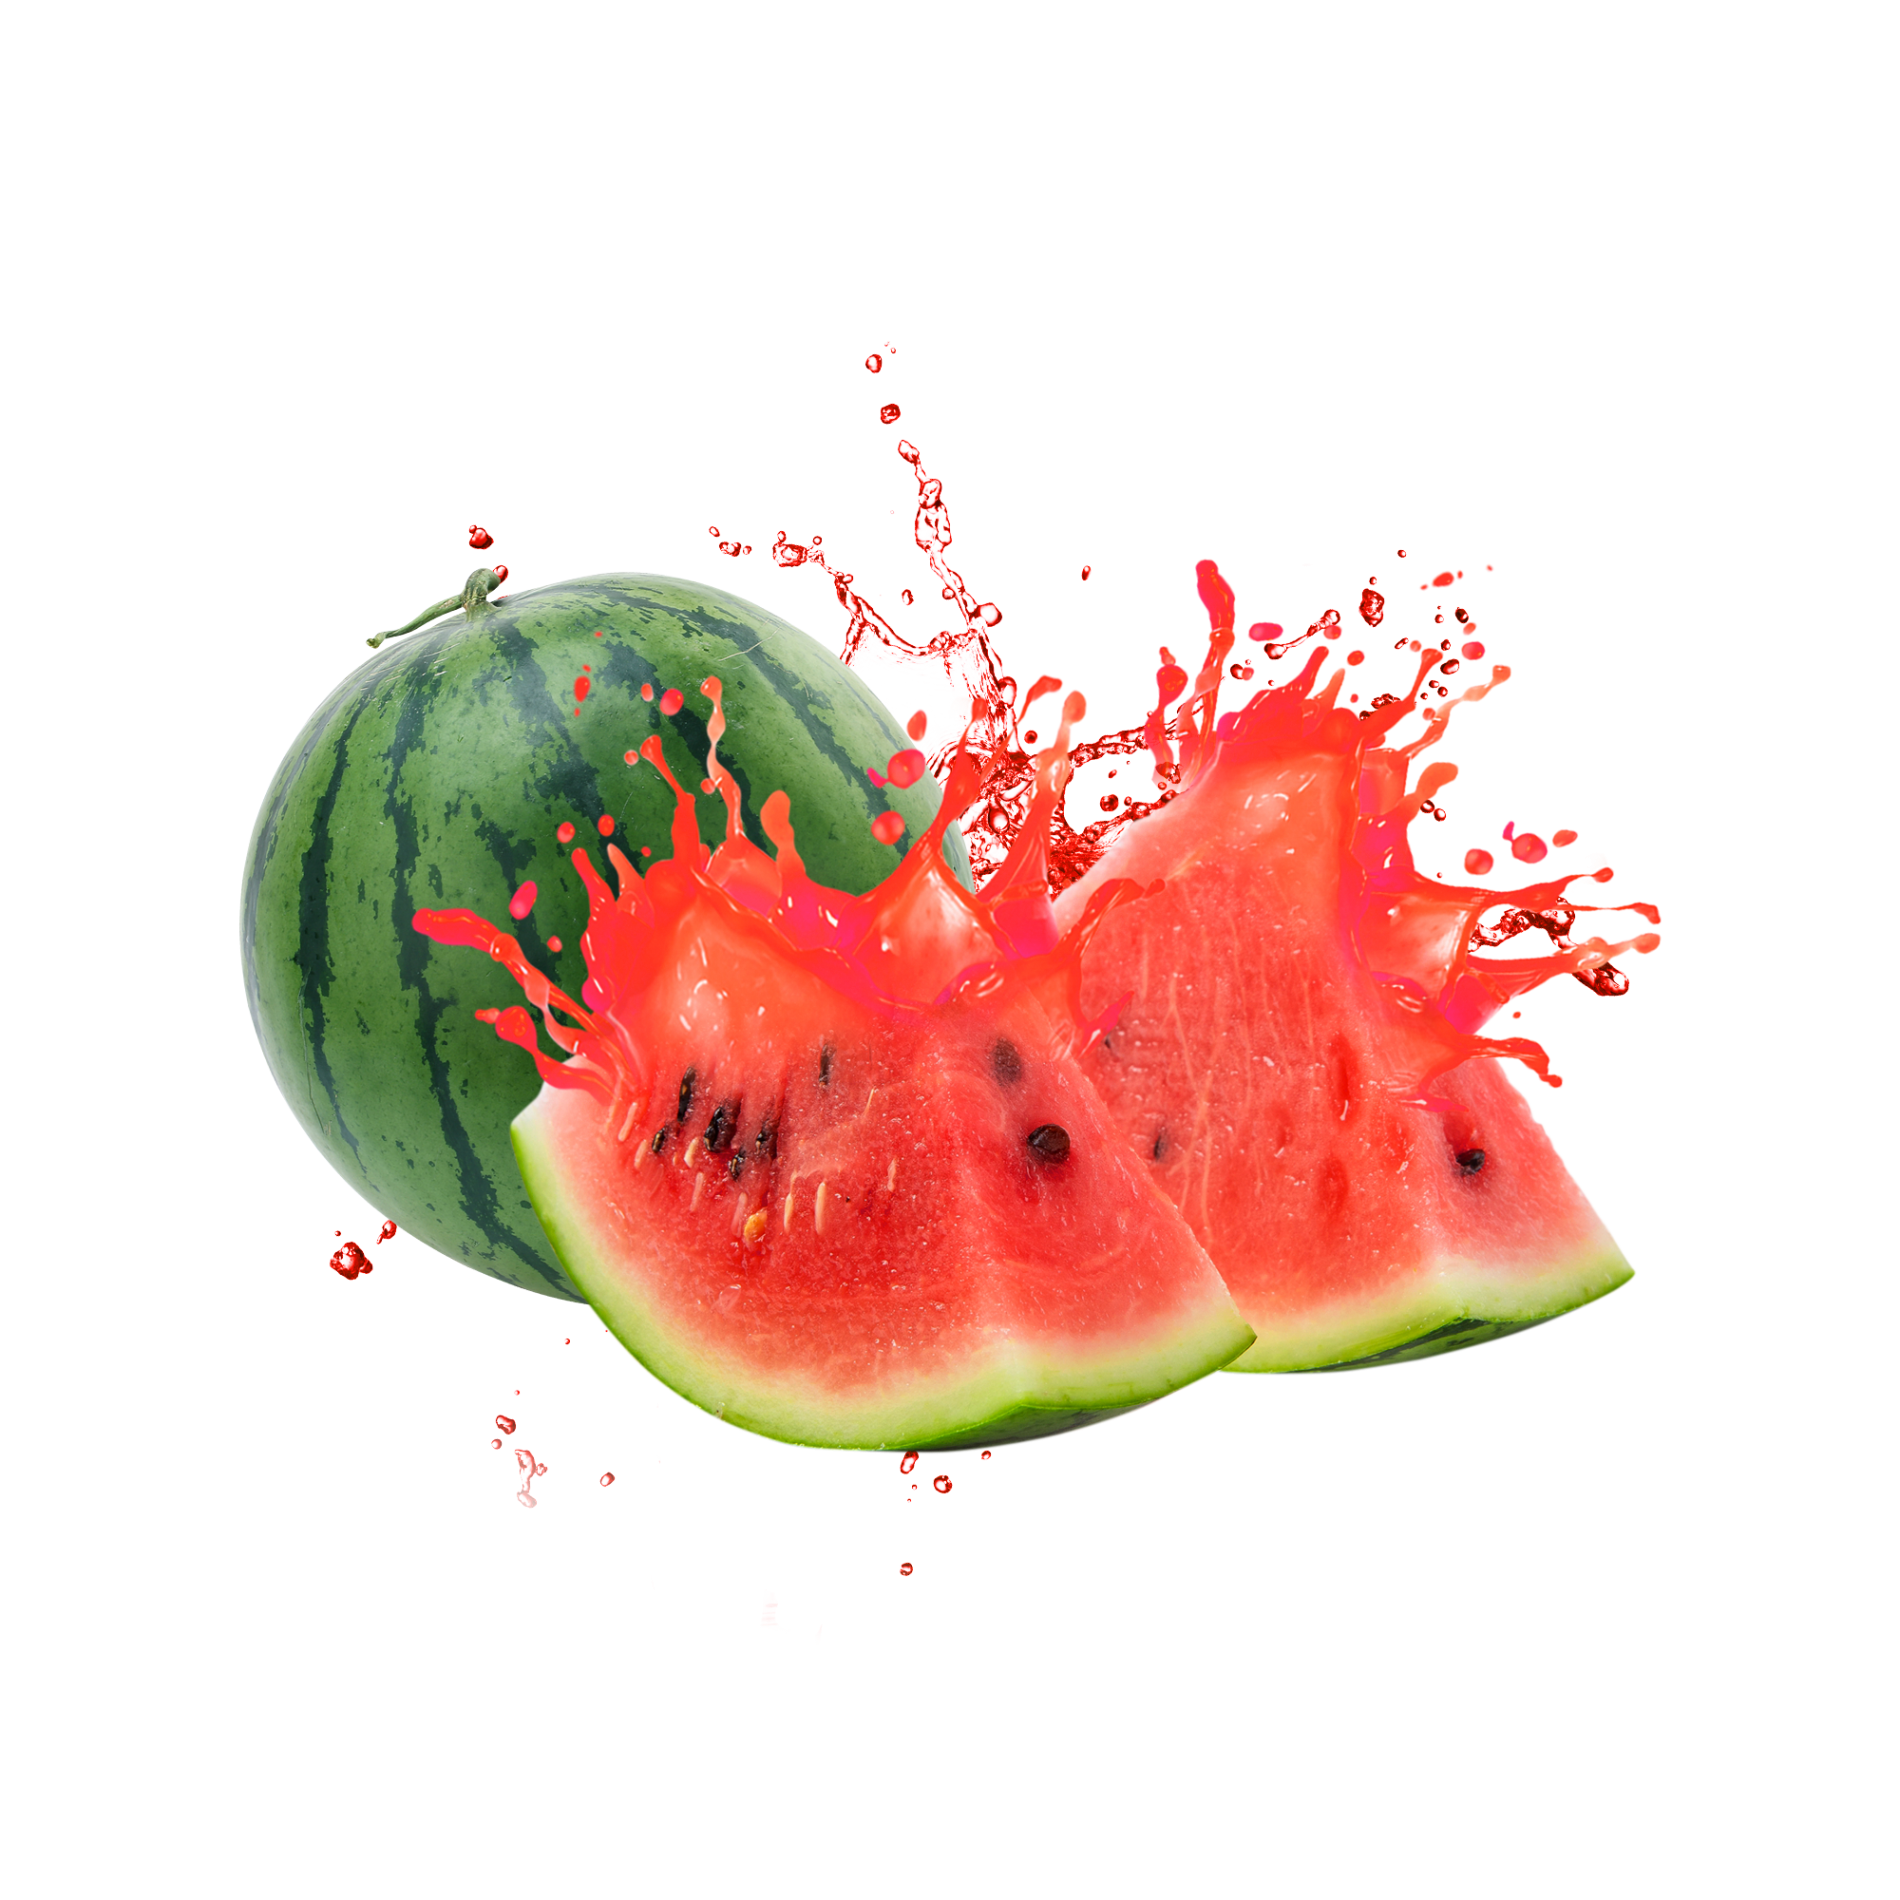 lovepik_com-401631339-watermelon-splashing